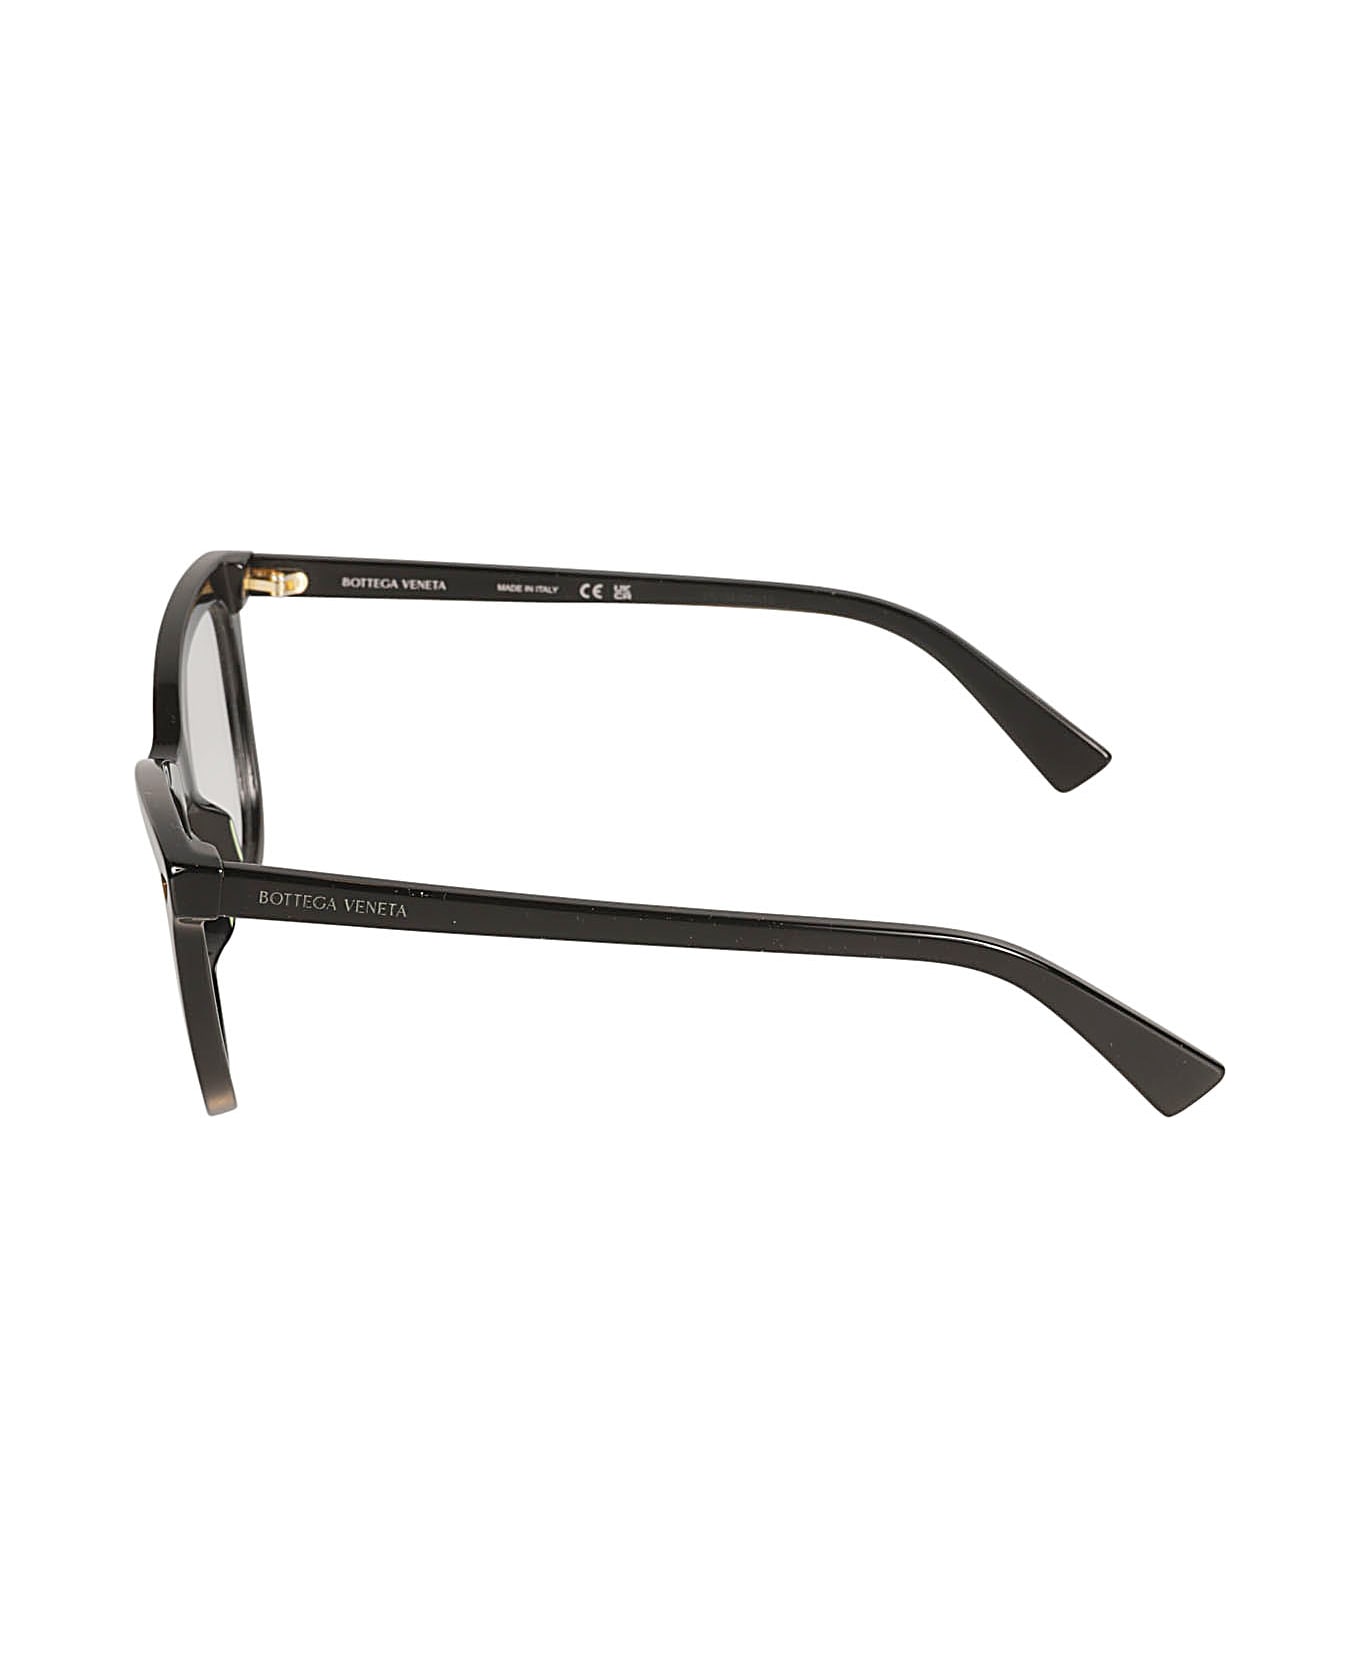 Bottega Veneta Eyewear Square Frame Glasses - Black/Transparent アイウェア